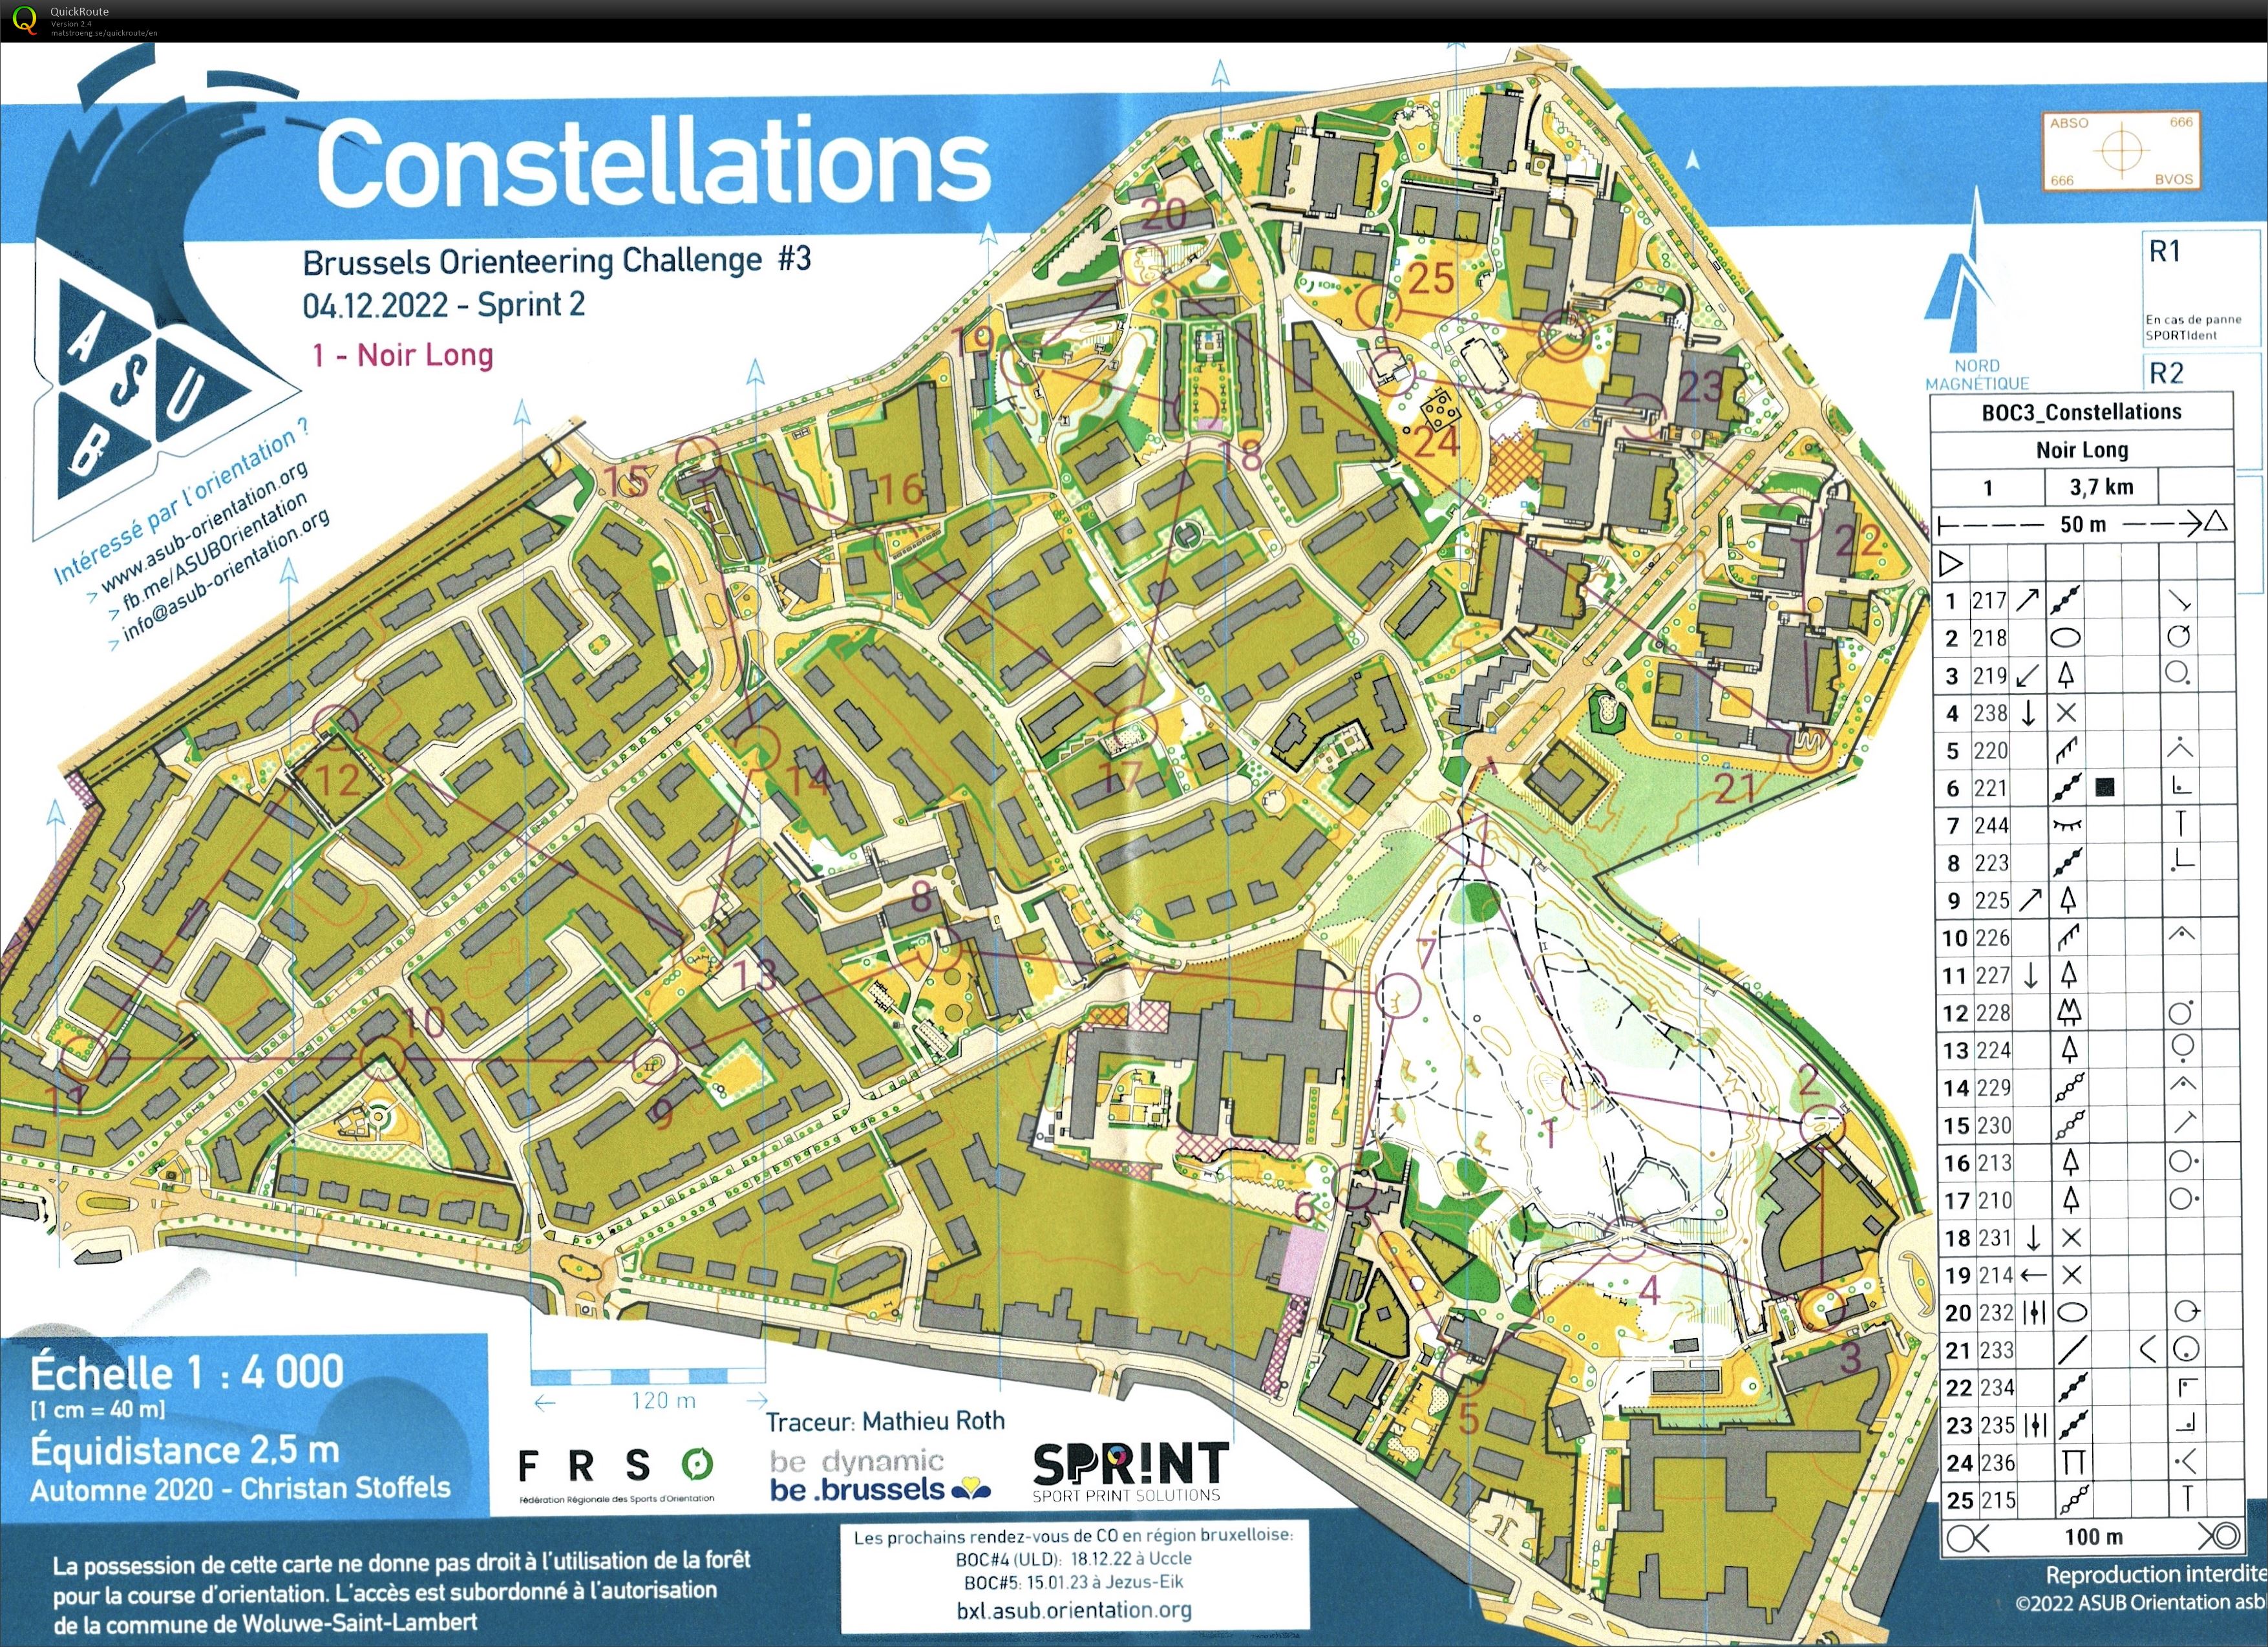 Brussels Orienteering Challenge #3 - Sprint 2 - Constellations (04-12-2022)